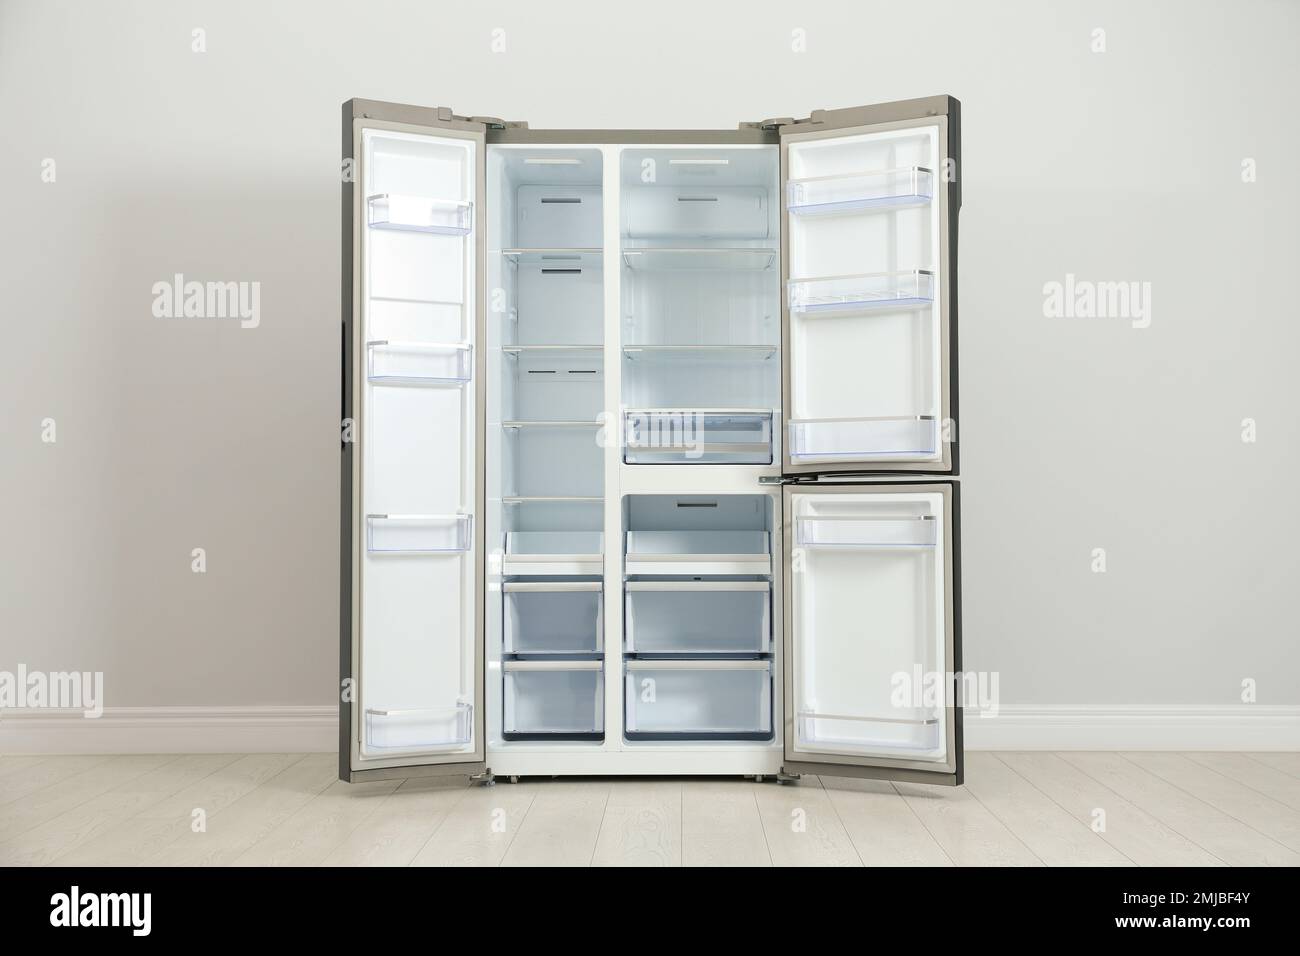 Modern empty refrigerator near light grey wall. Home appliance Stock Photo